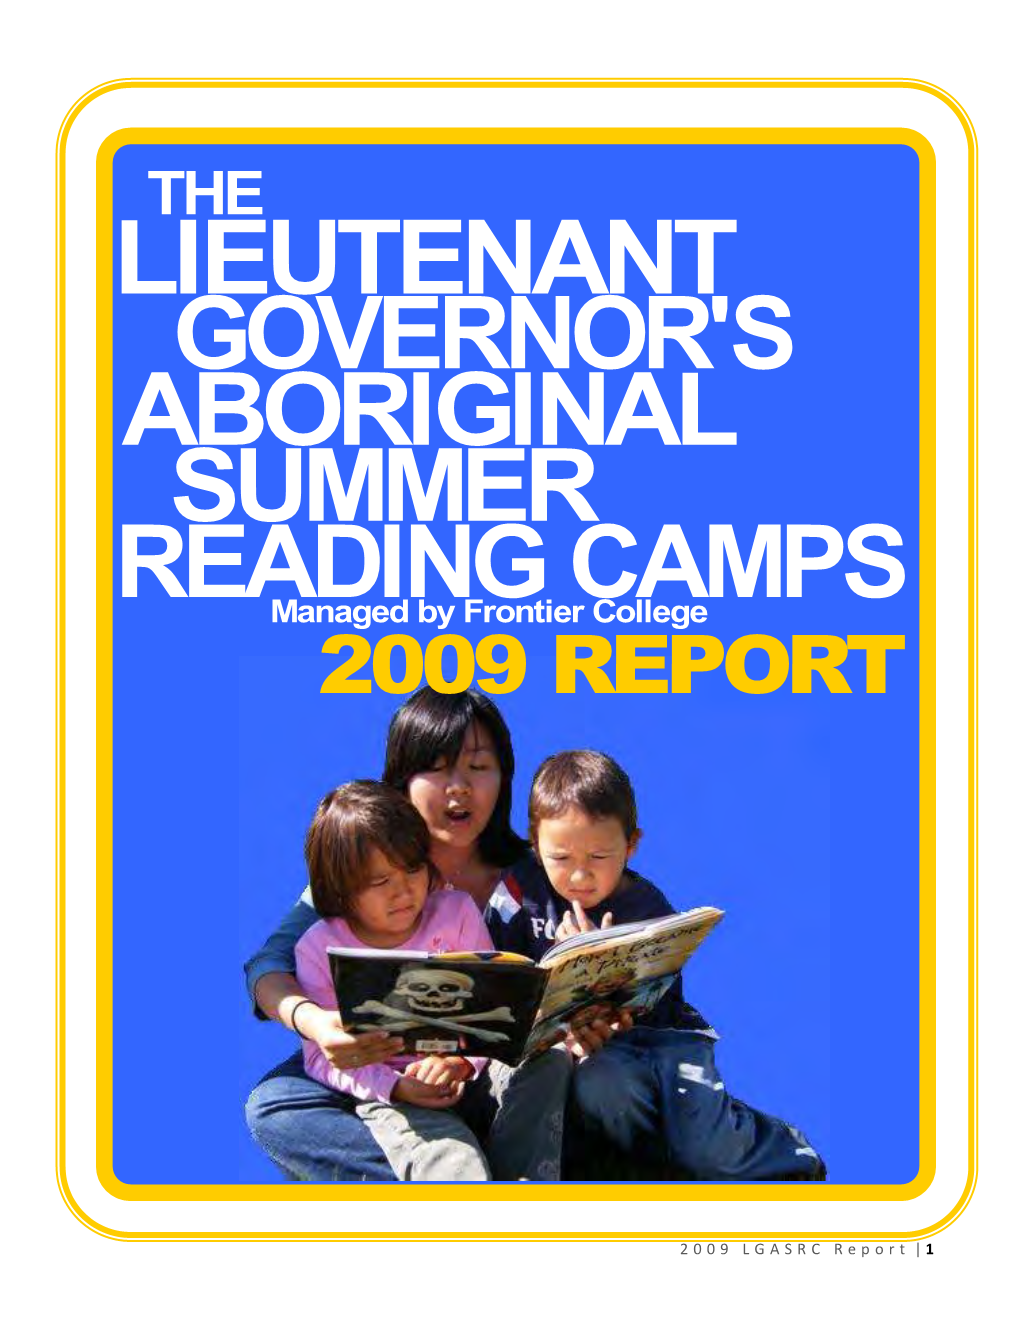 The Lieutenant Governor's Aboriginal Summer Reading Camps